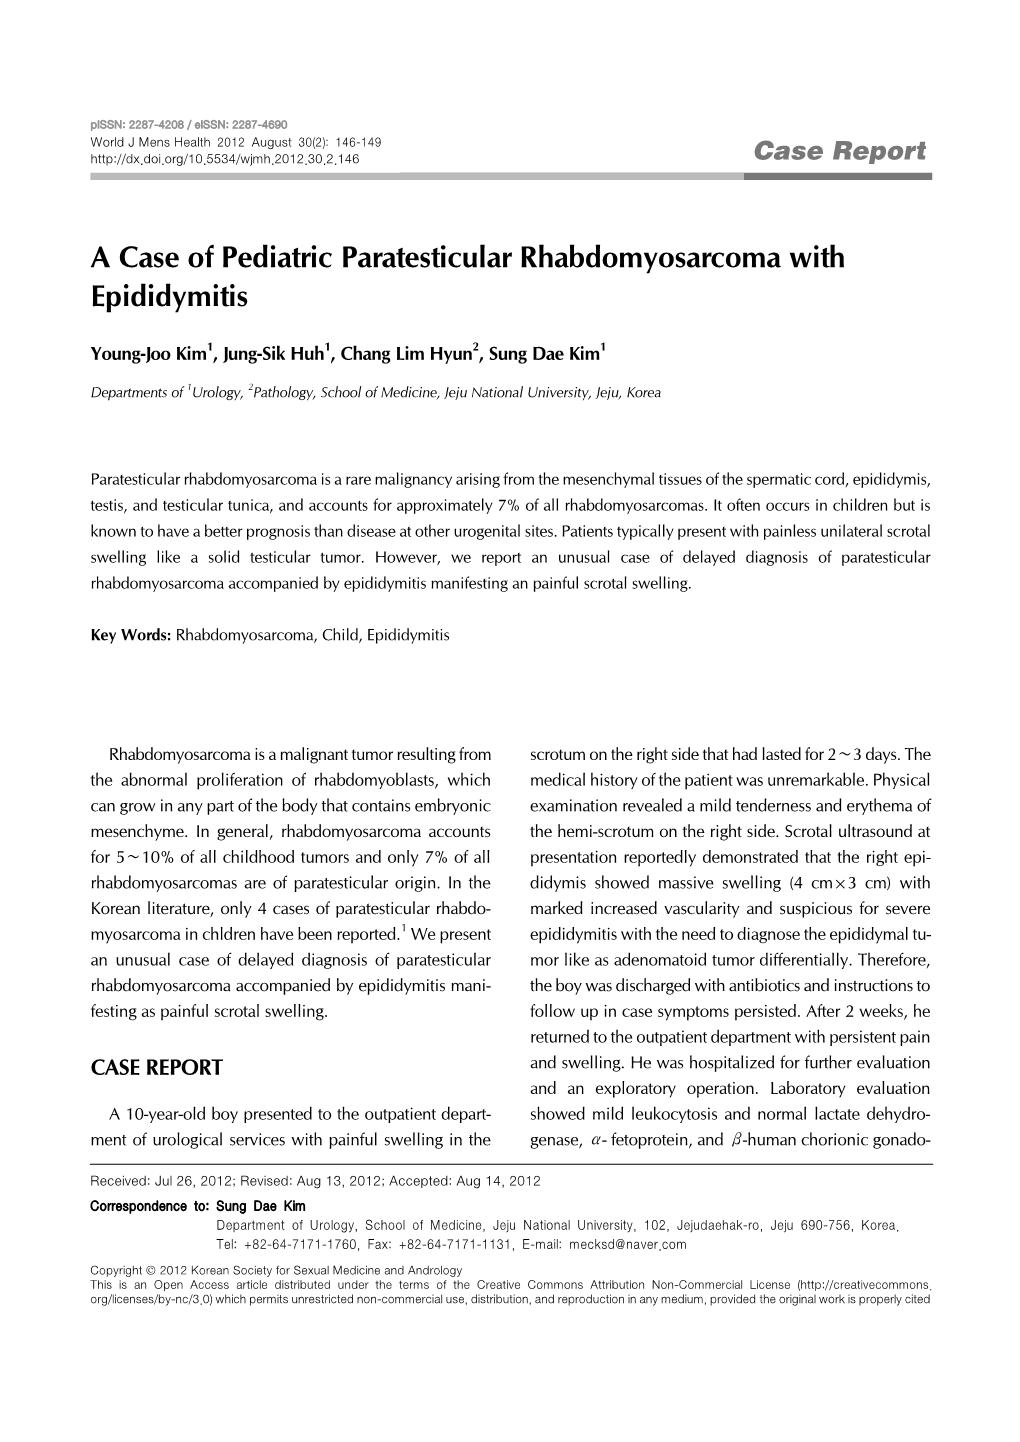 A Case of Pediatric Paratesticular Rhabdomyosarcoma with Epididymitis